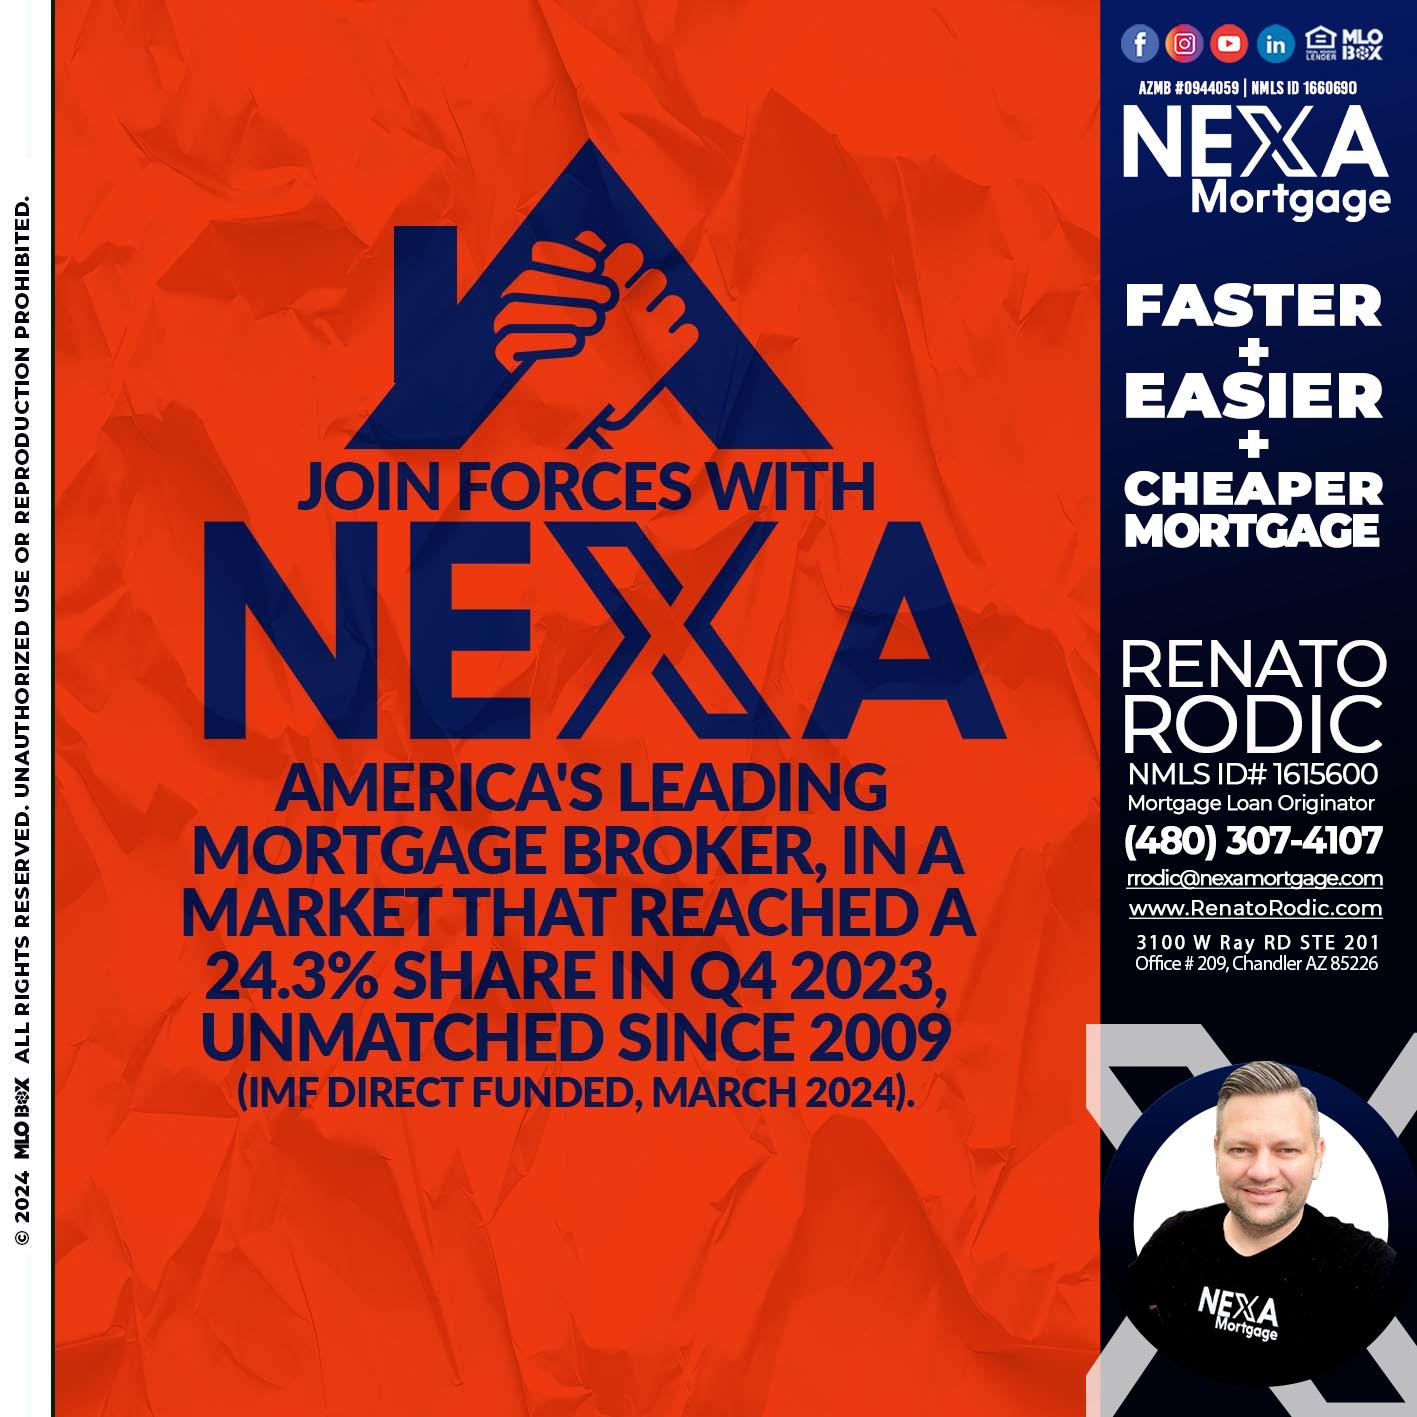 nexa - Renato Rodic -Mortgage Loan Originator